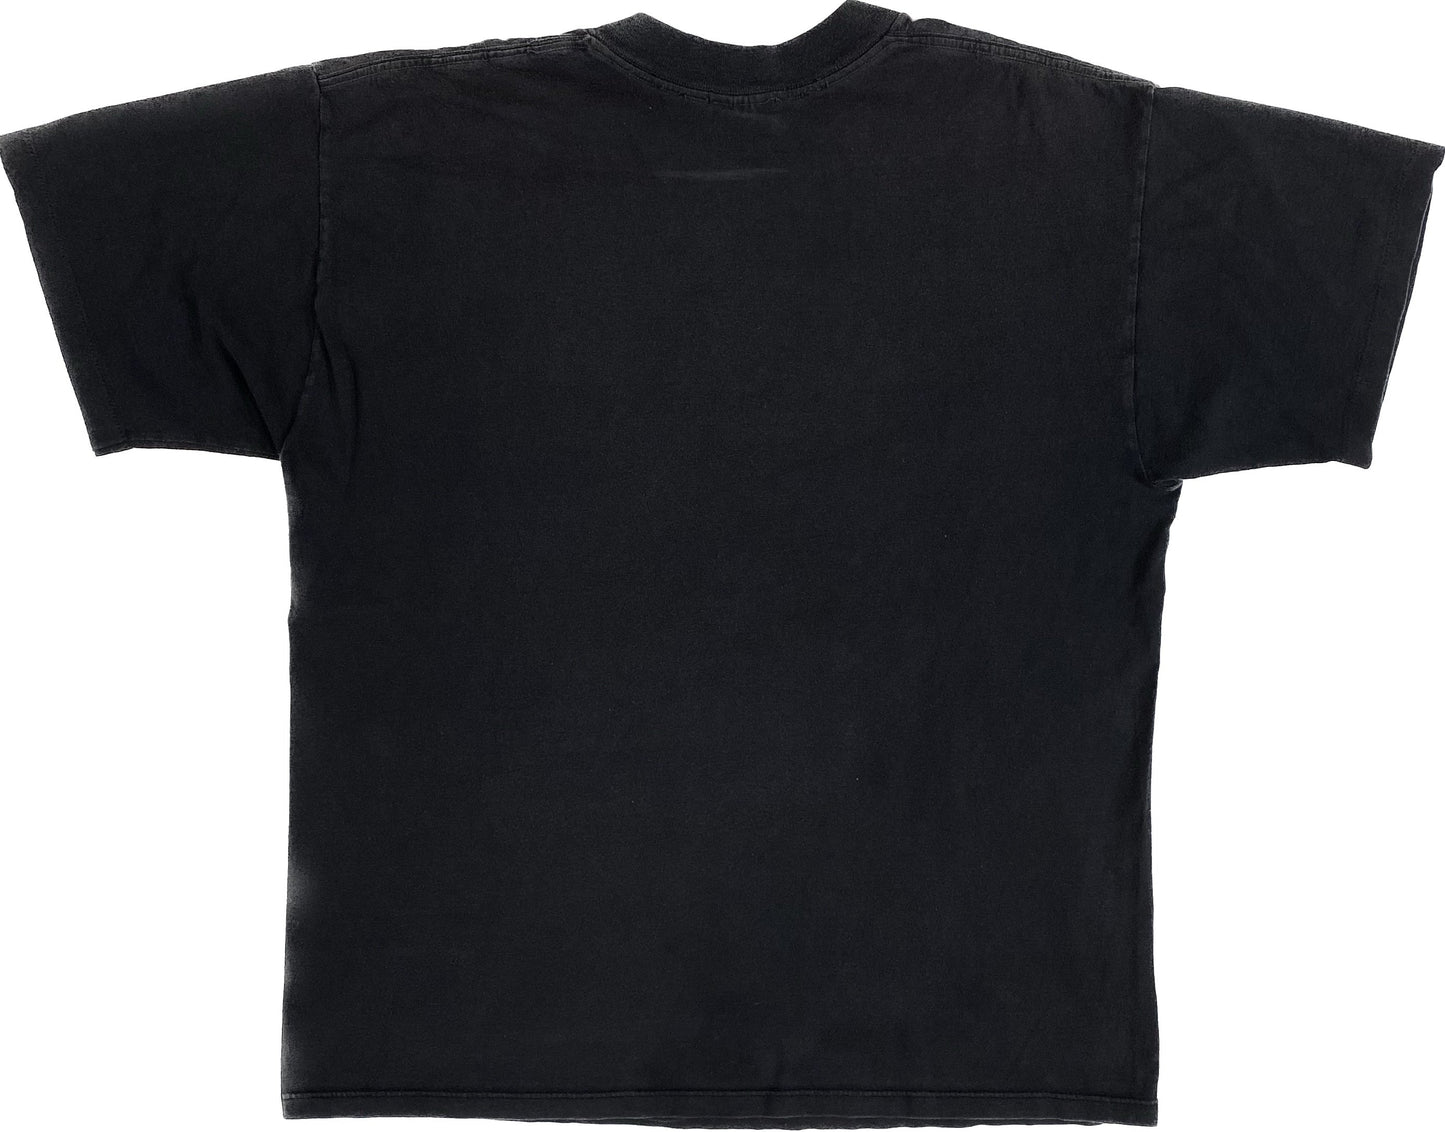 90’s Carolina Panthers Zubaz T-shirt Sz L (X278)